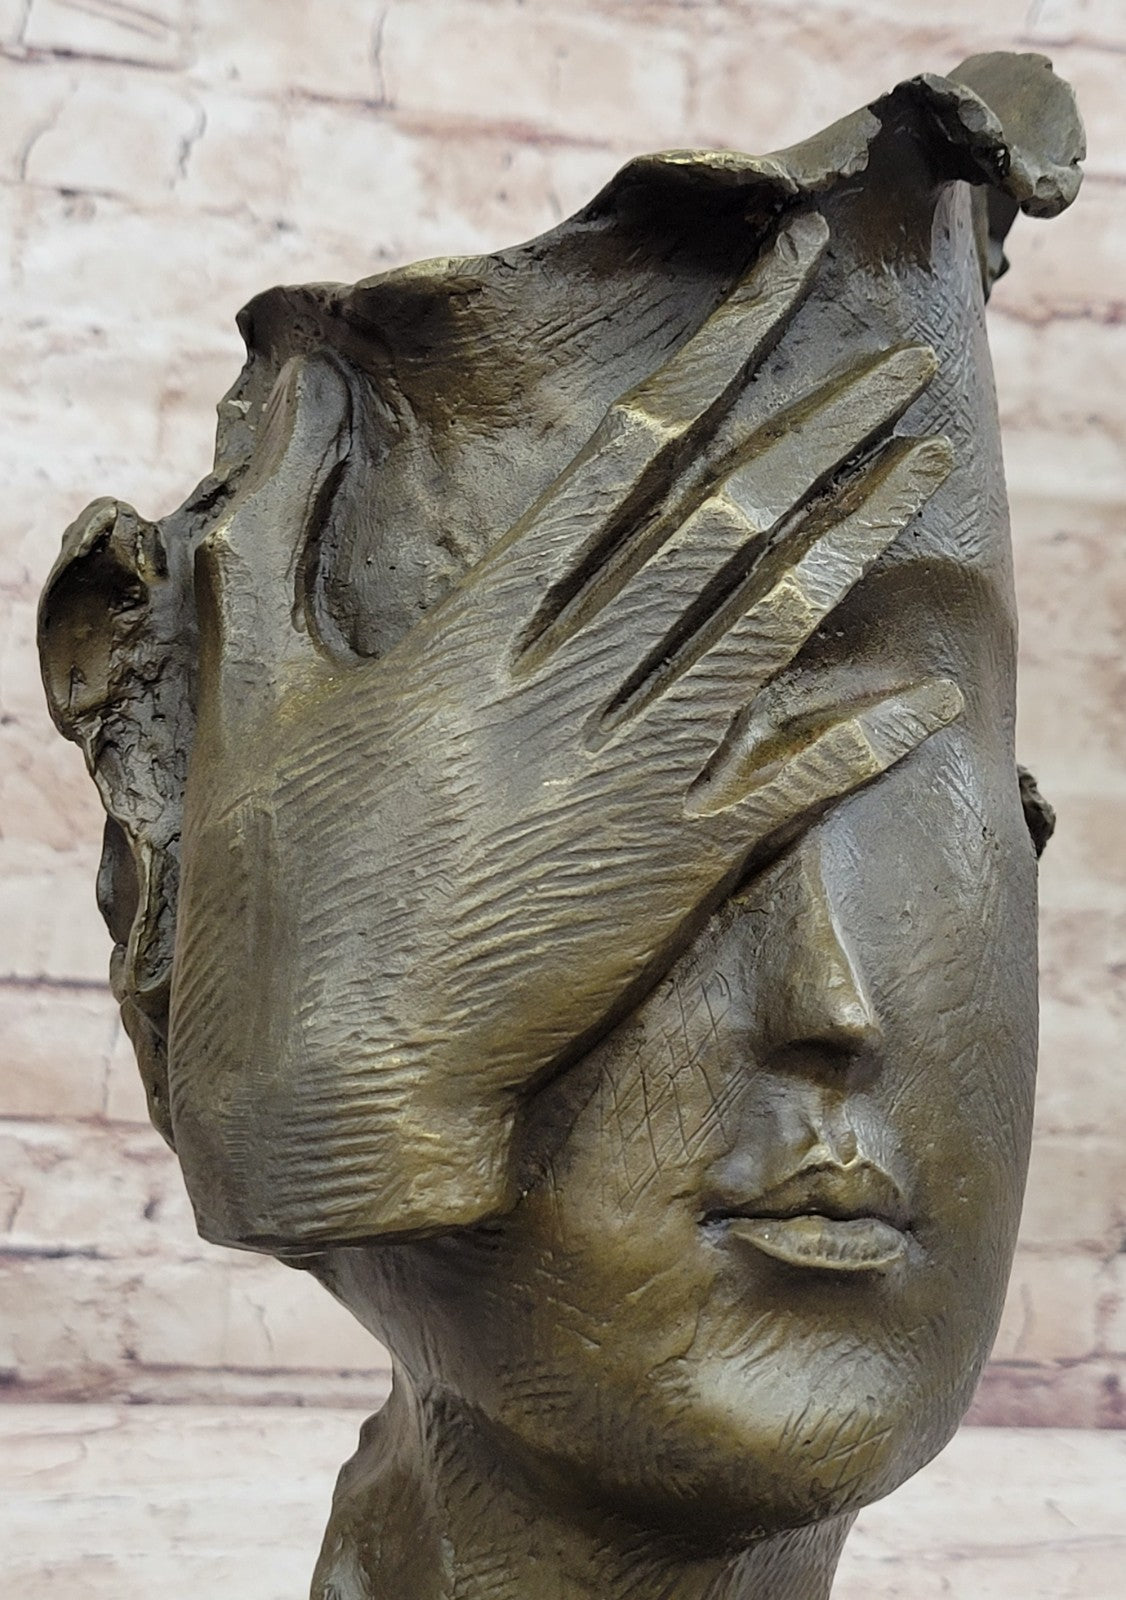 Hot Cast Dali Face Bronze Sculpture Marble Figurine Home Office Decoration 